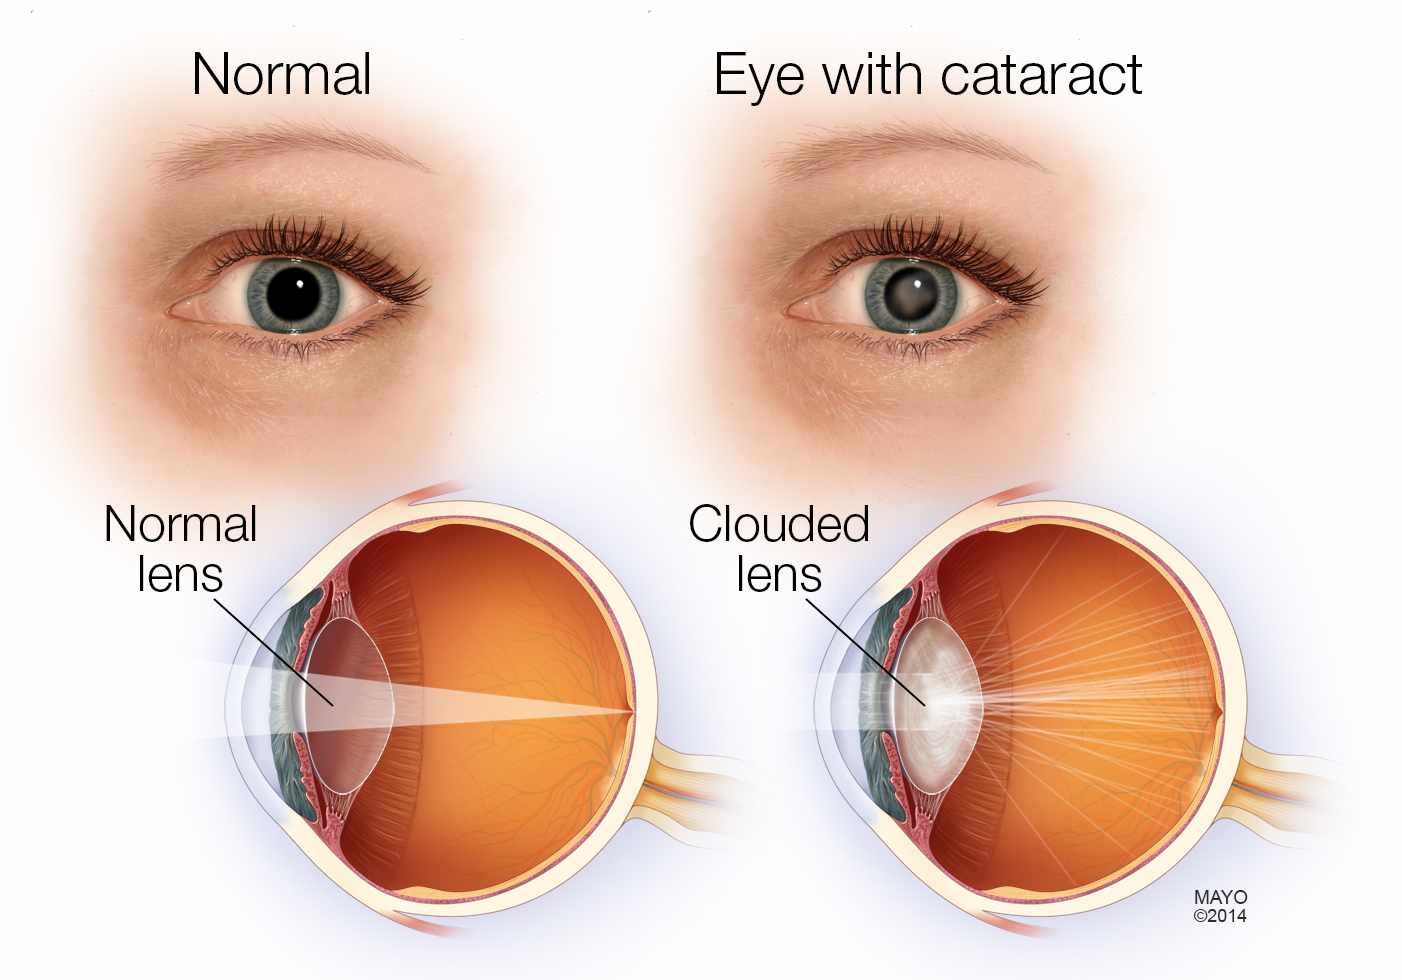 Normal and Cataract Eye